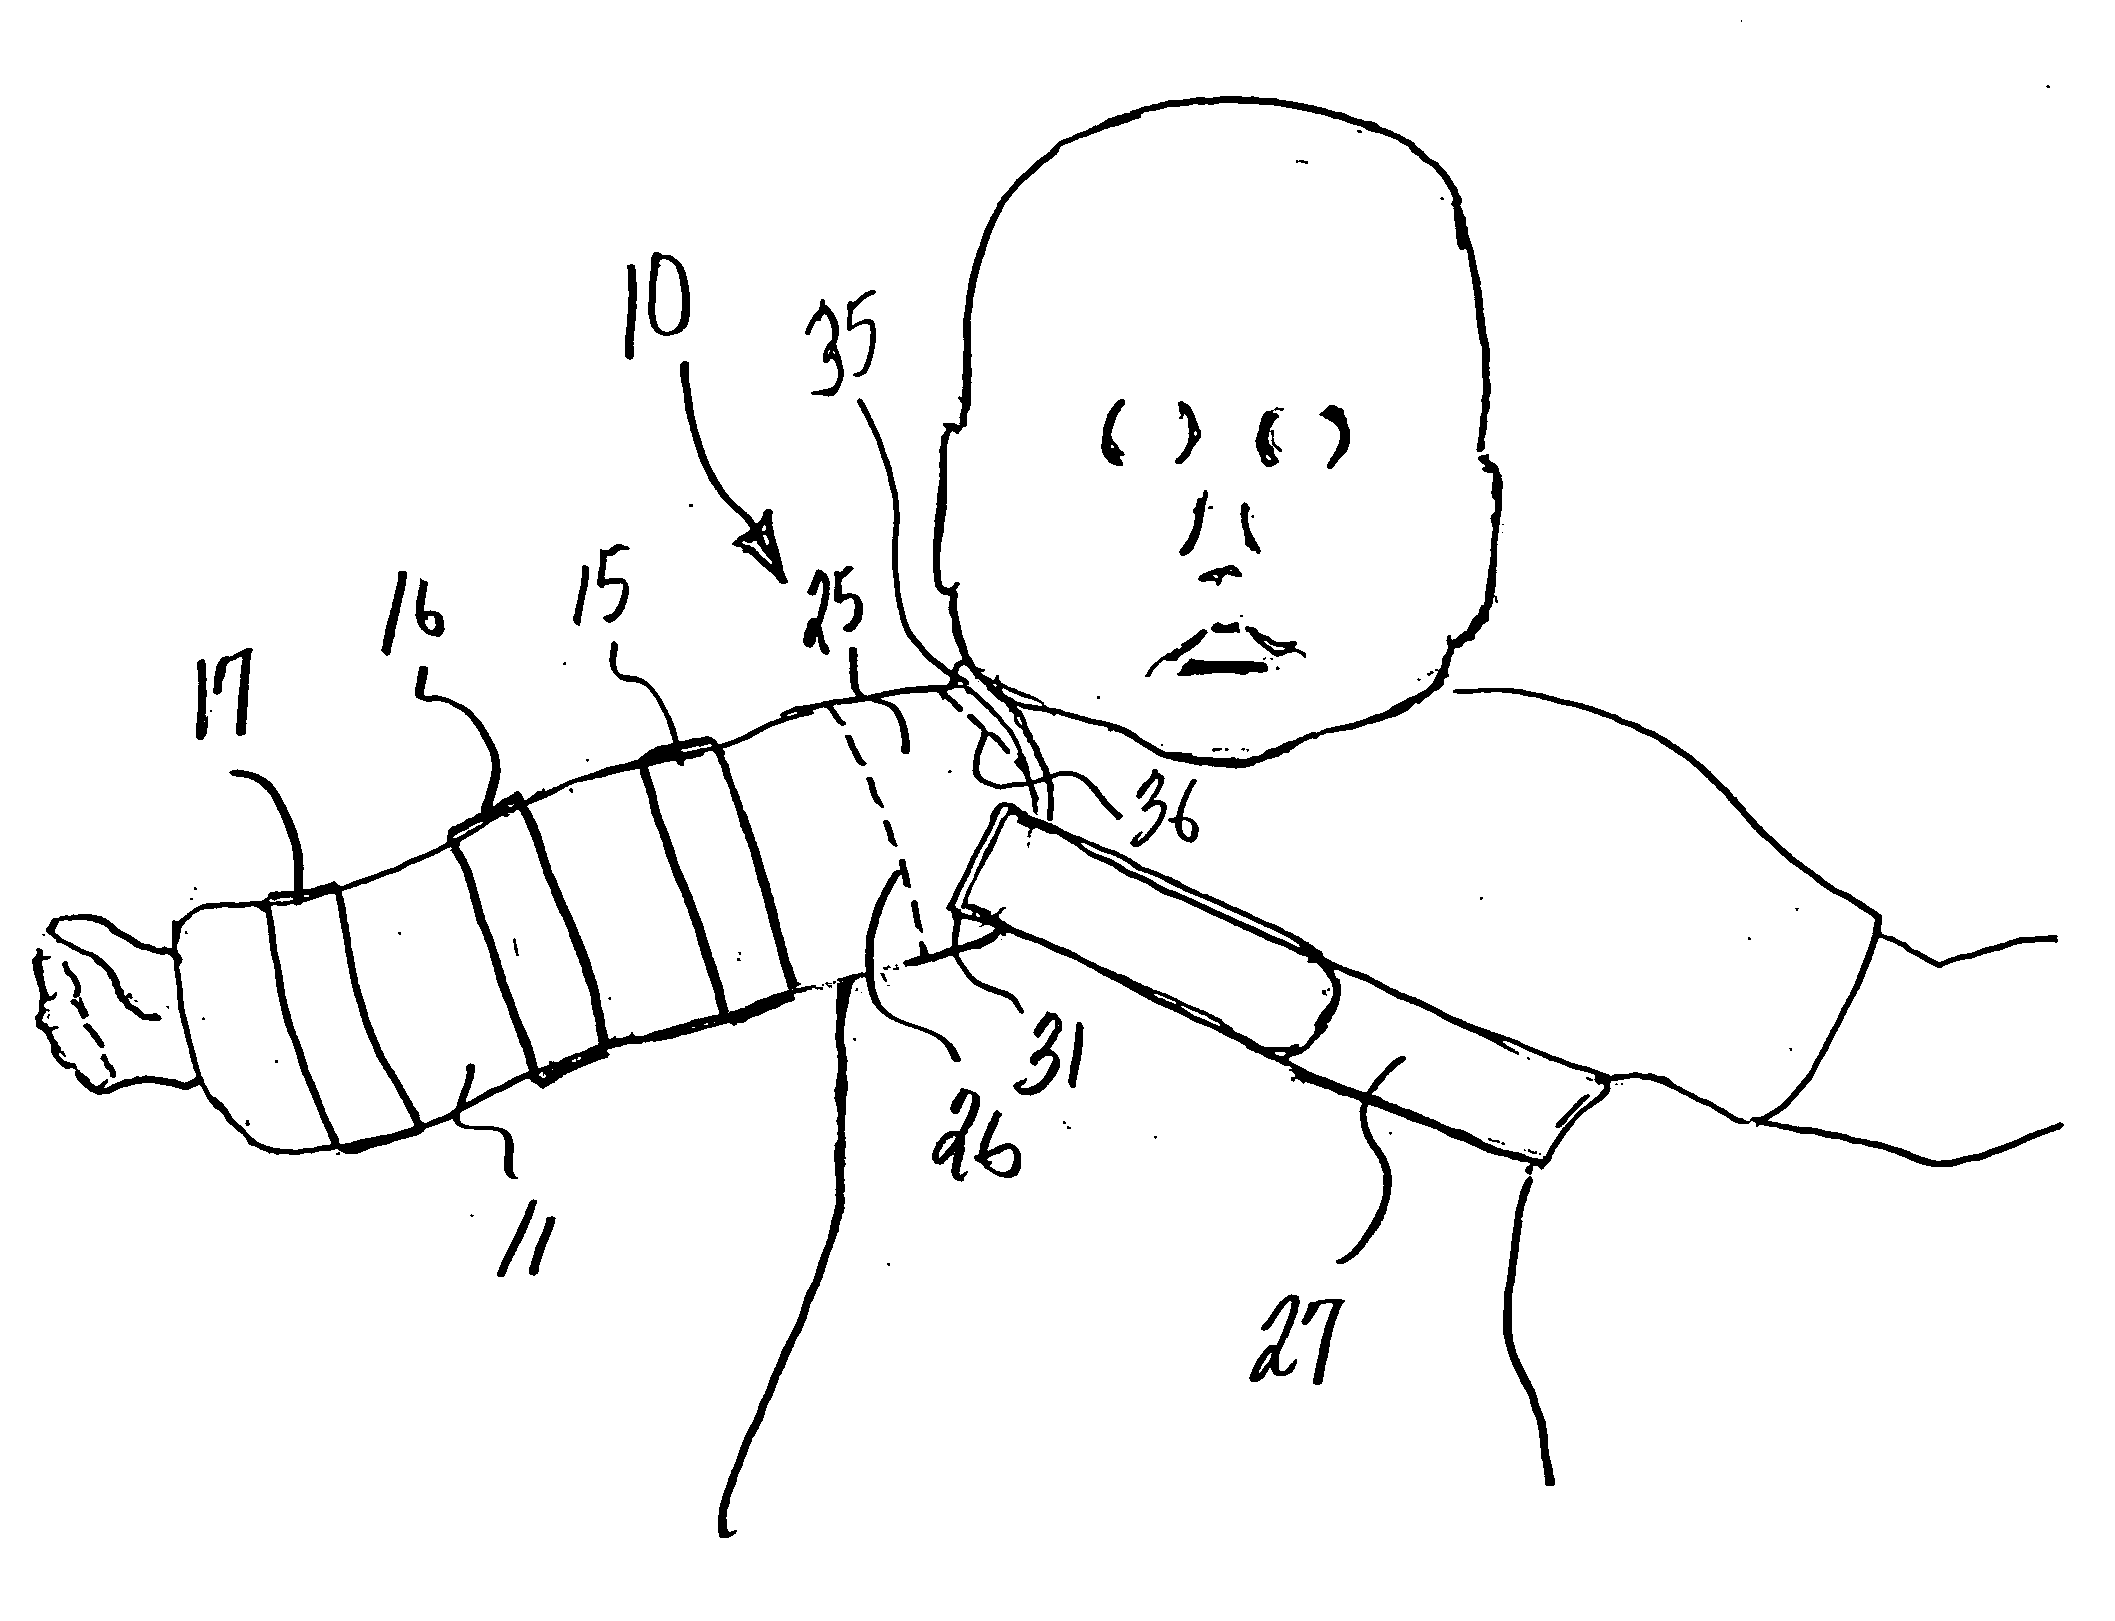 Pediatric arm restraint